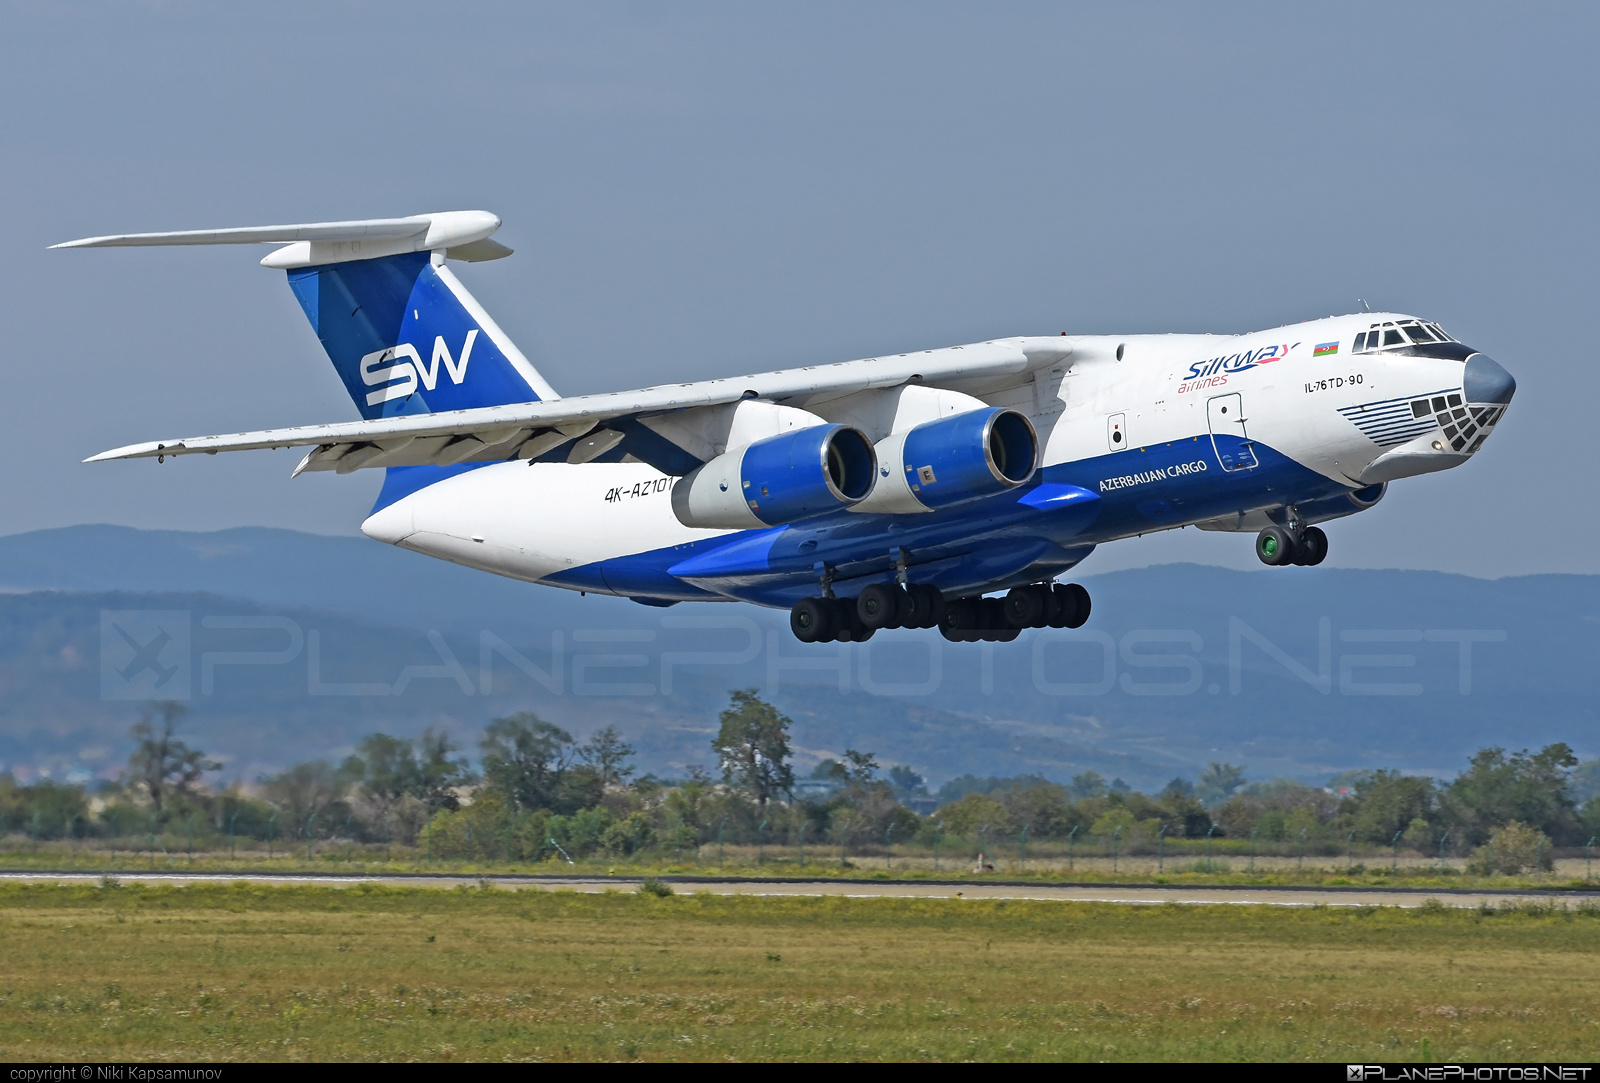 Ilyushin Il-76TD-90 - 4K-AZ101 operated by Silk Way Airlines #il76 #il76td90 #ilyushin #silkwayairlines